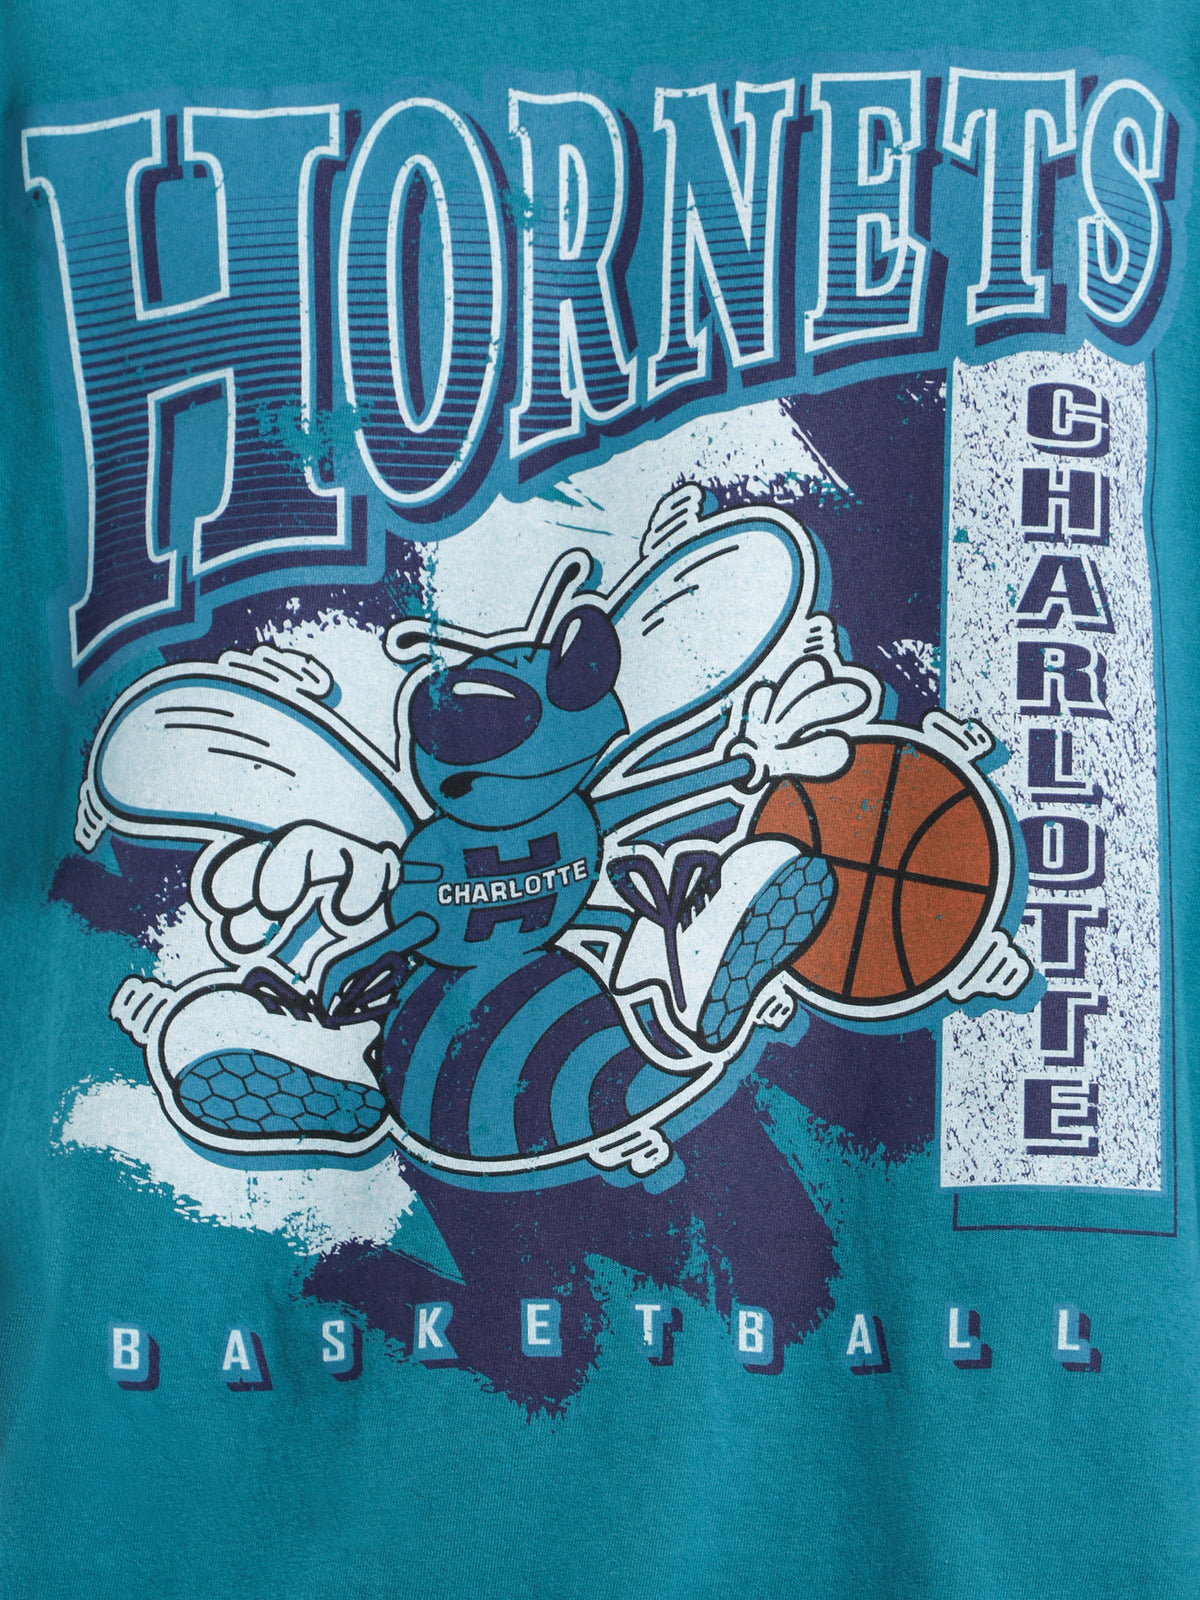 Charlotte Hornets T-Shirt in Teal